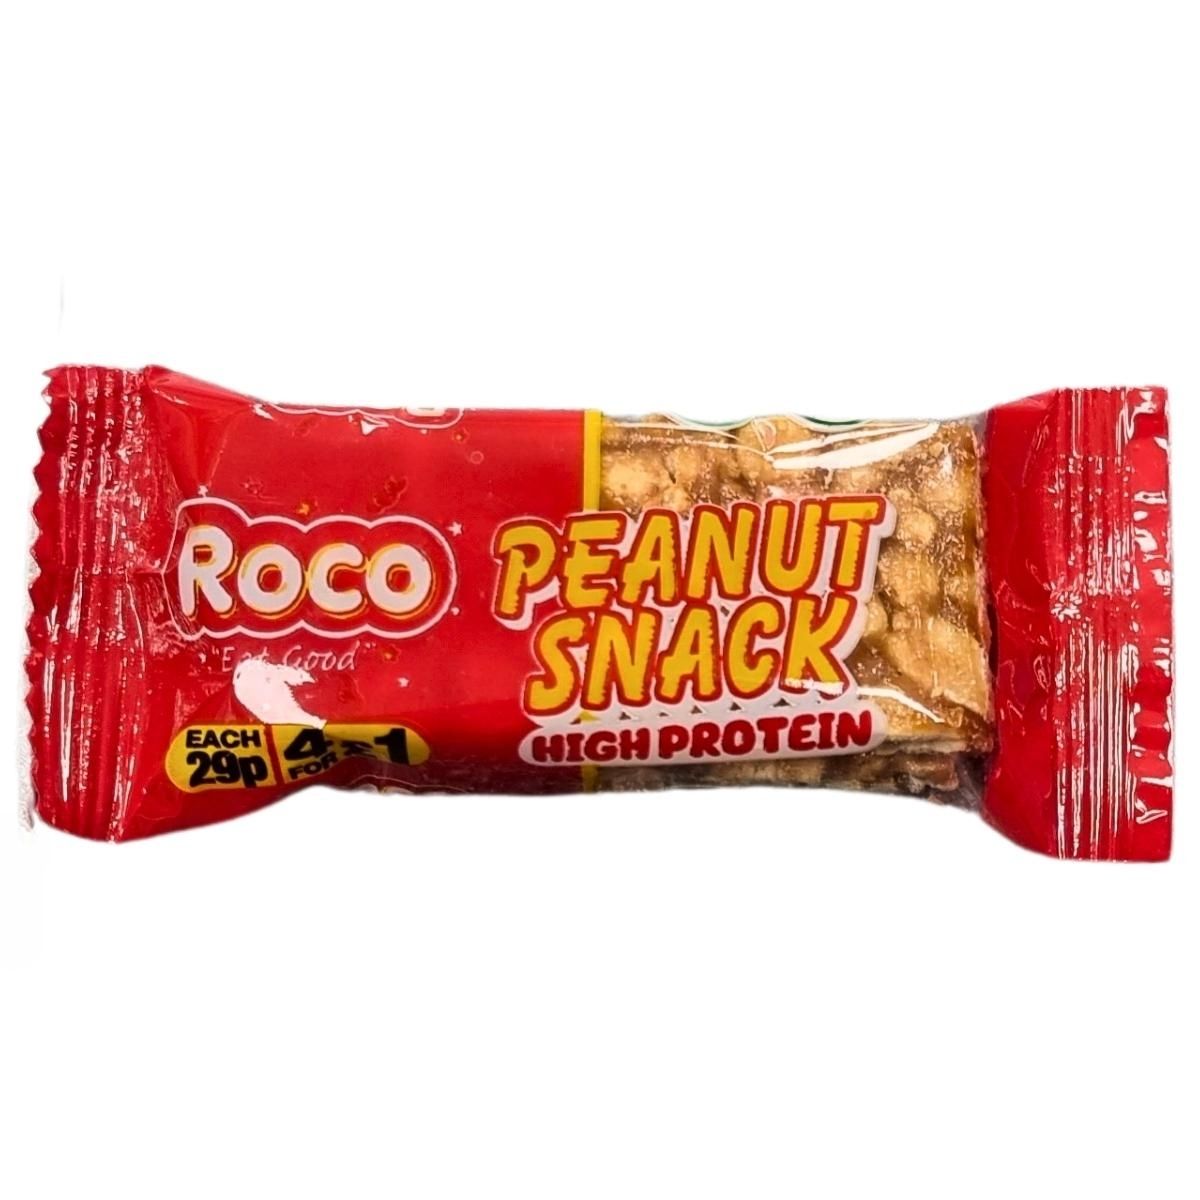 Roco - Peanut Snack (Gluten Free) - 28g - Continental Food Store